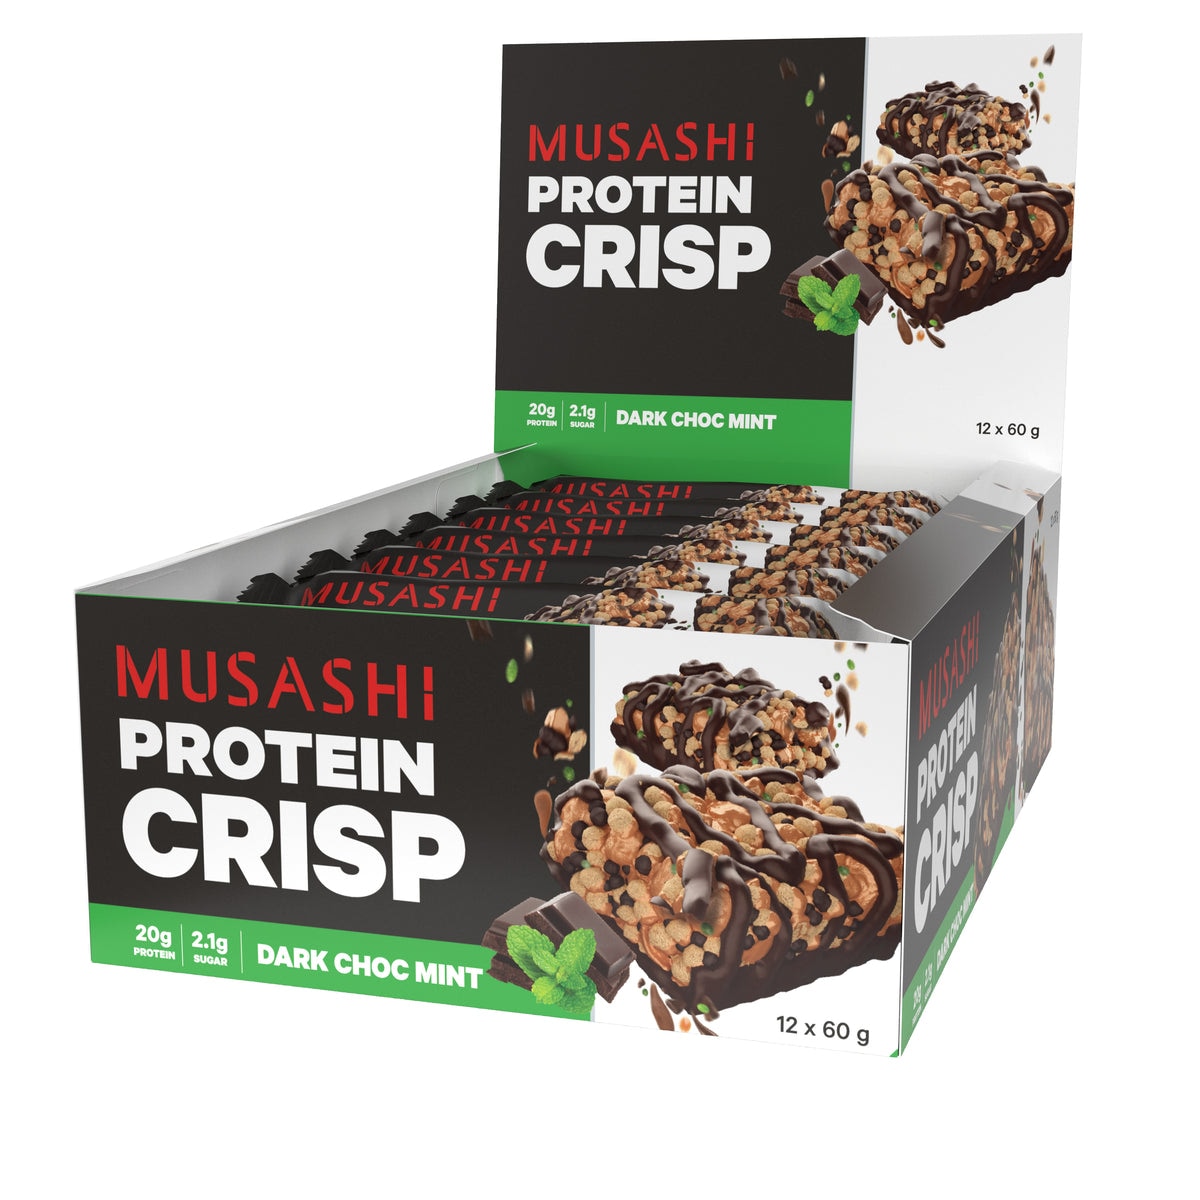 Musashi Dark Choc Mint Protein Crisp Bar 12 x 60g Australia